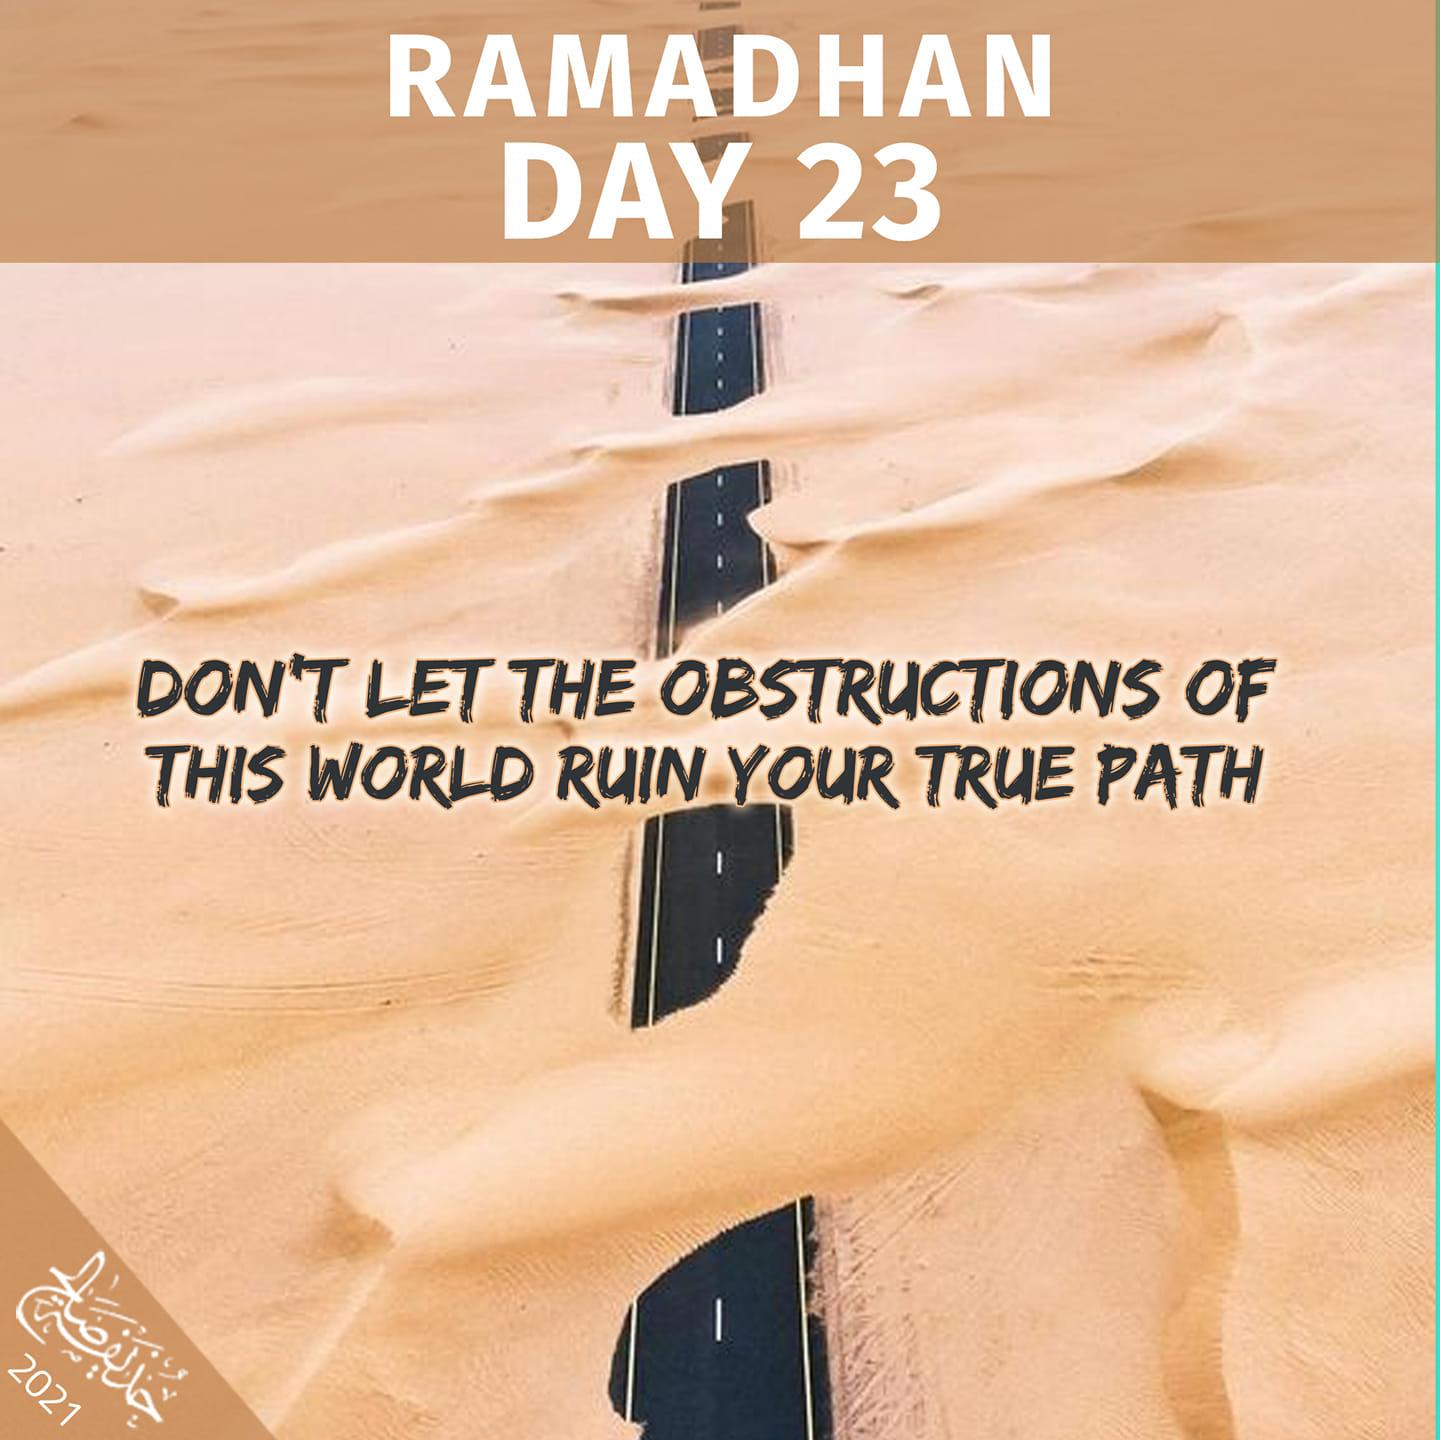 182385394 4600822163265979 3264716268125 1 - Daily Ramadhan Reminders (2021)